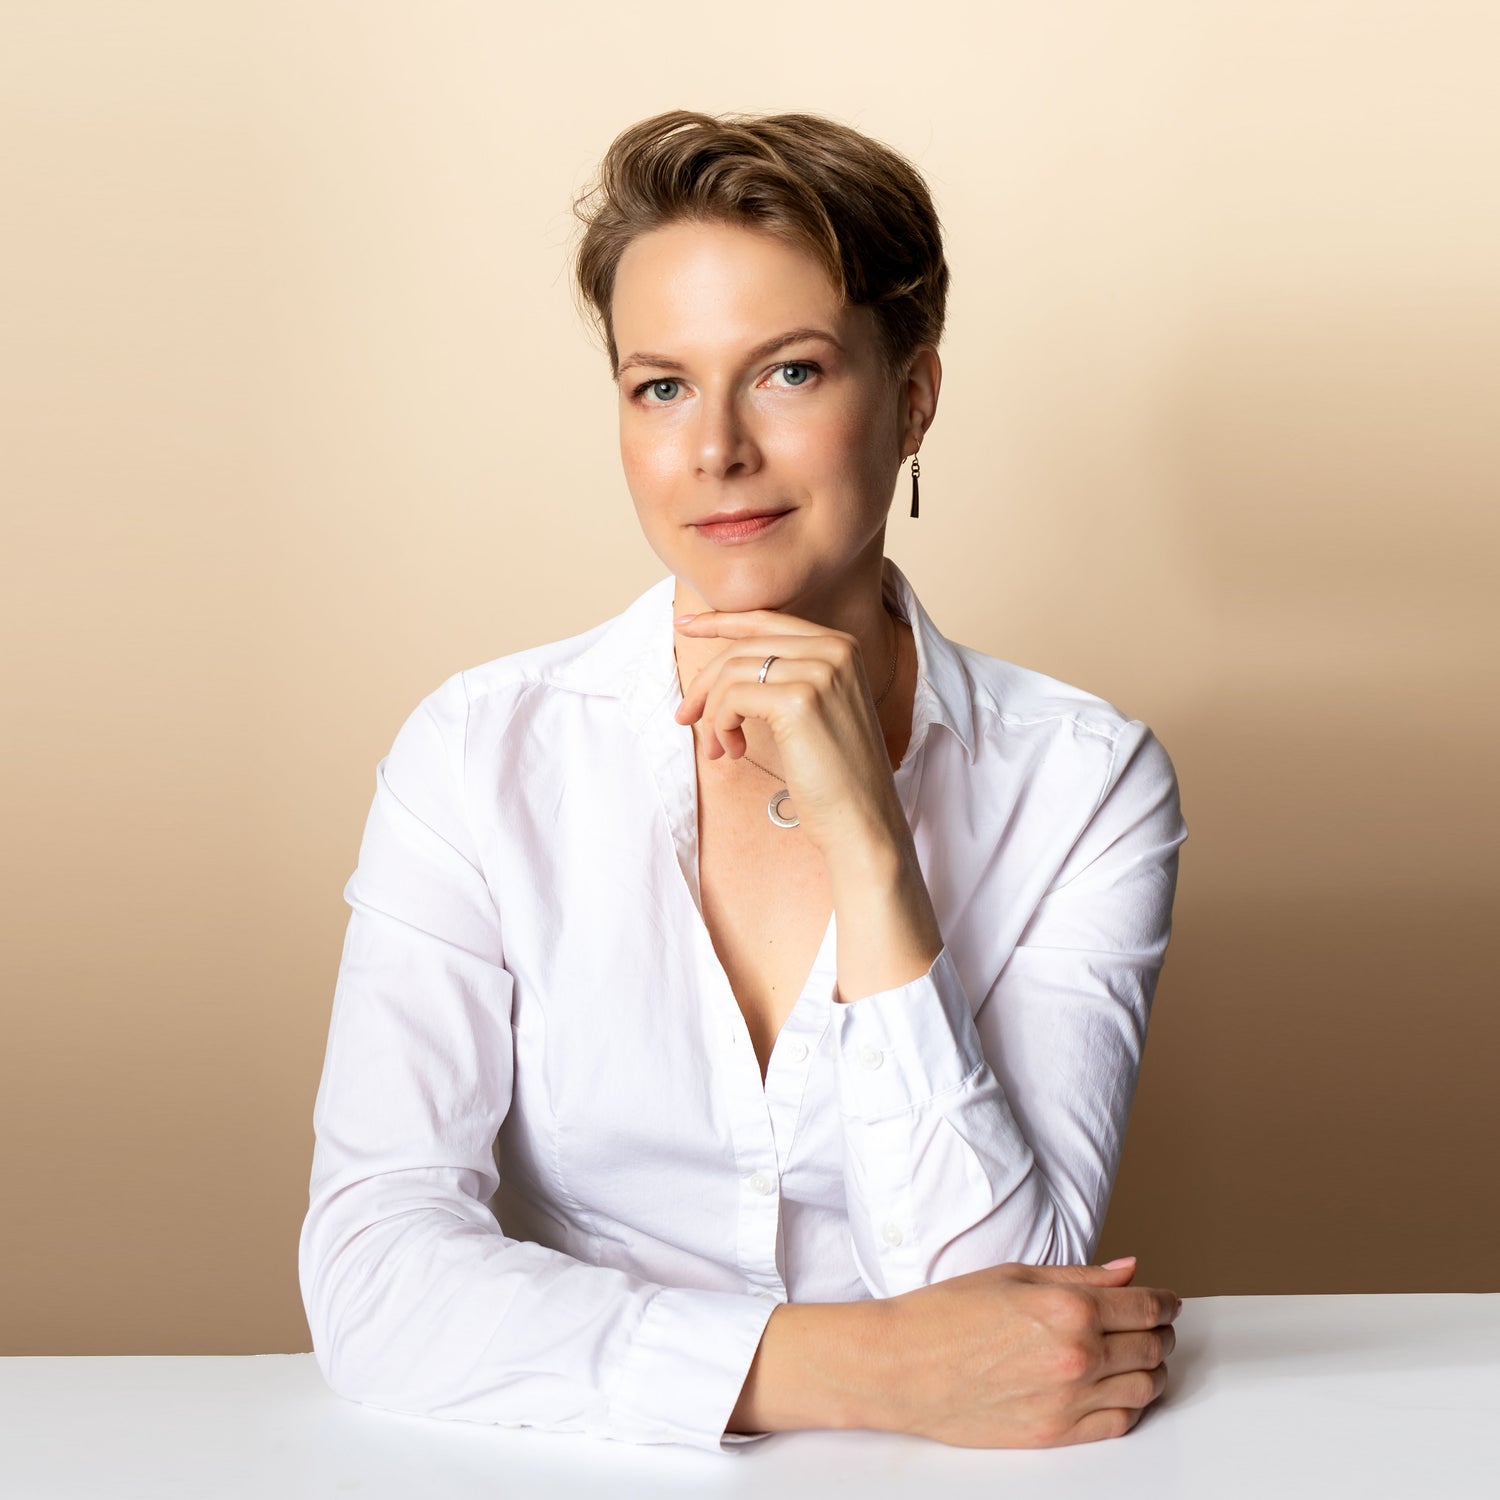 Jenny Soydanyavas, the founder of Jenny Nordic Skincare